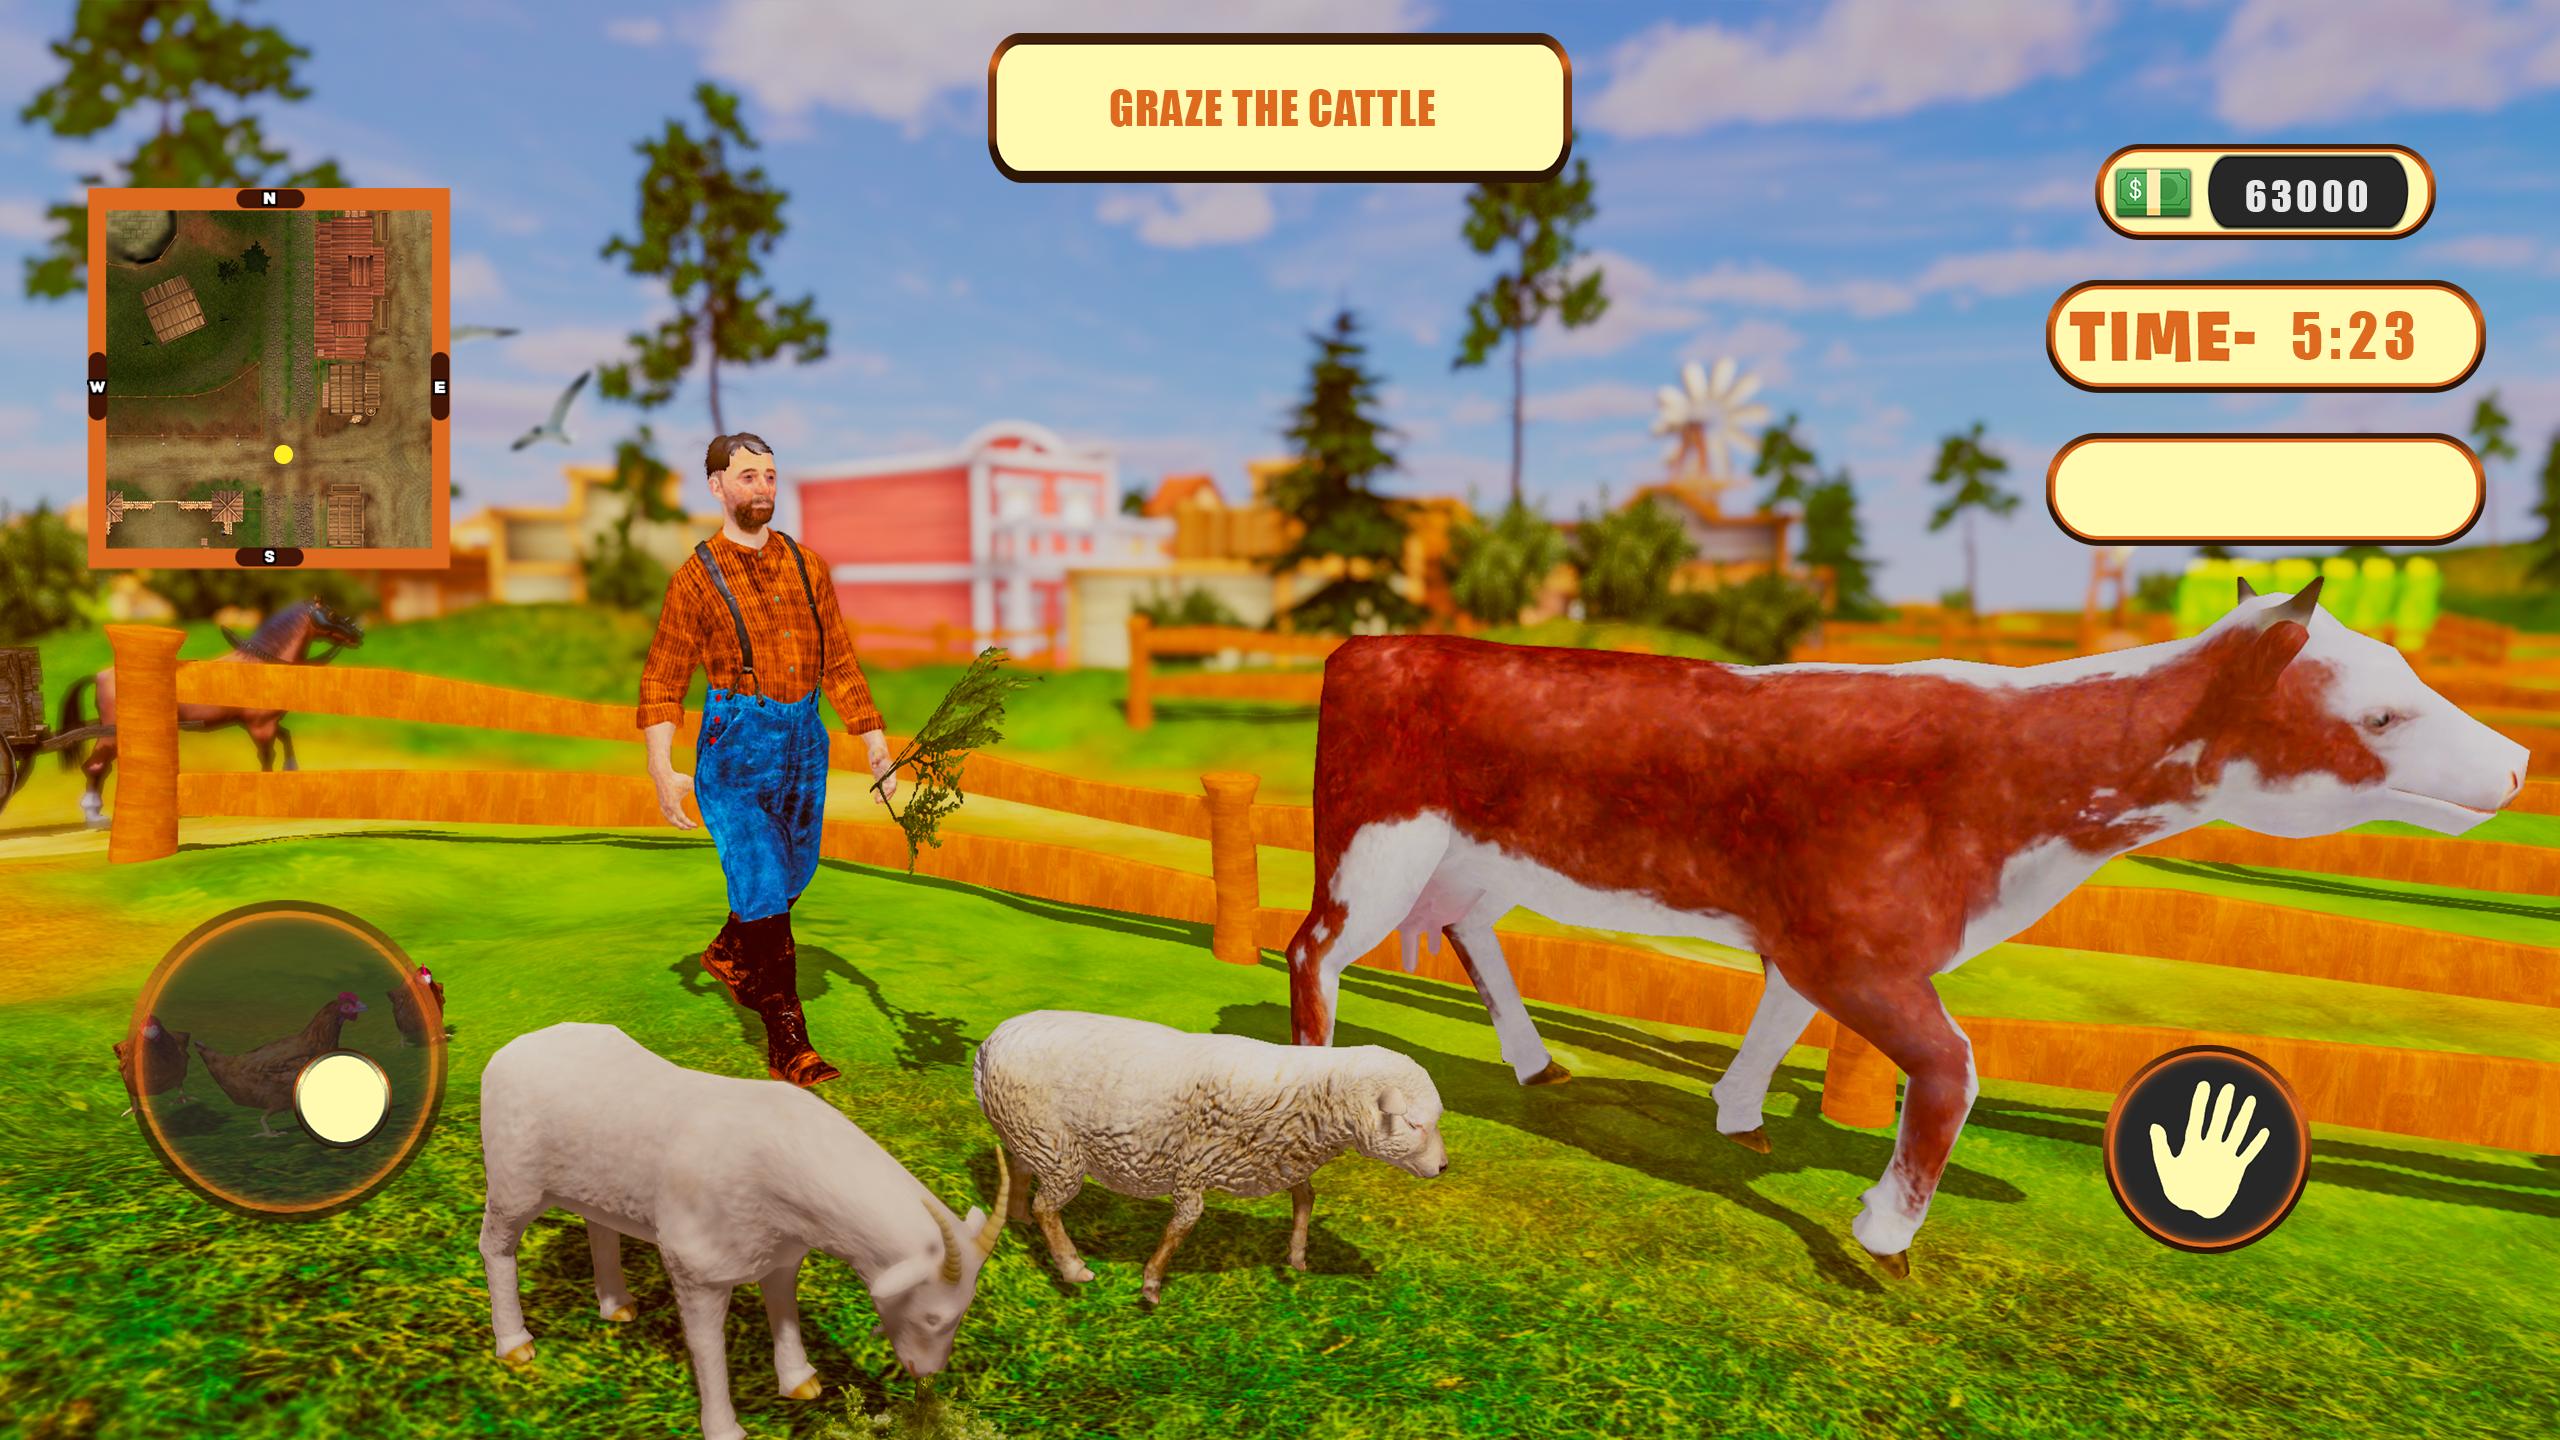 Ranch Simulator | Baixe e compre hoje - Epic Games Store